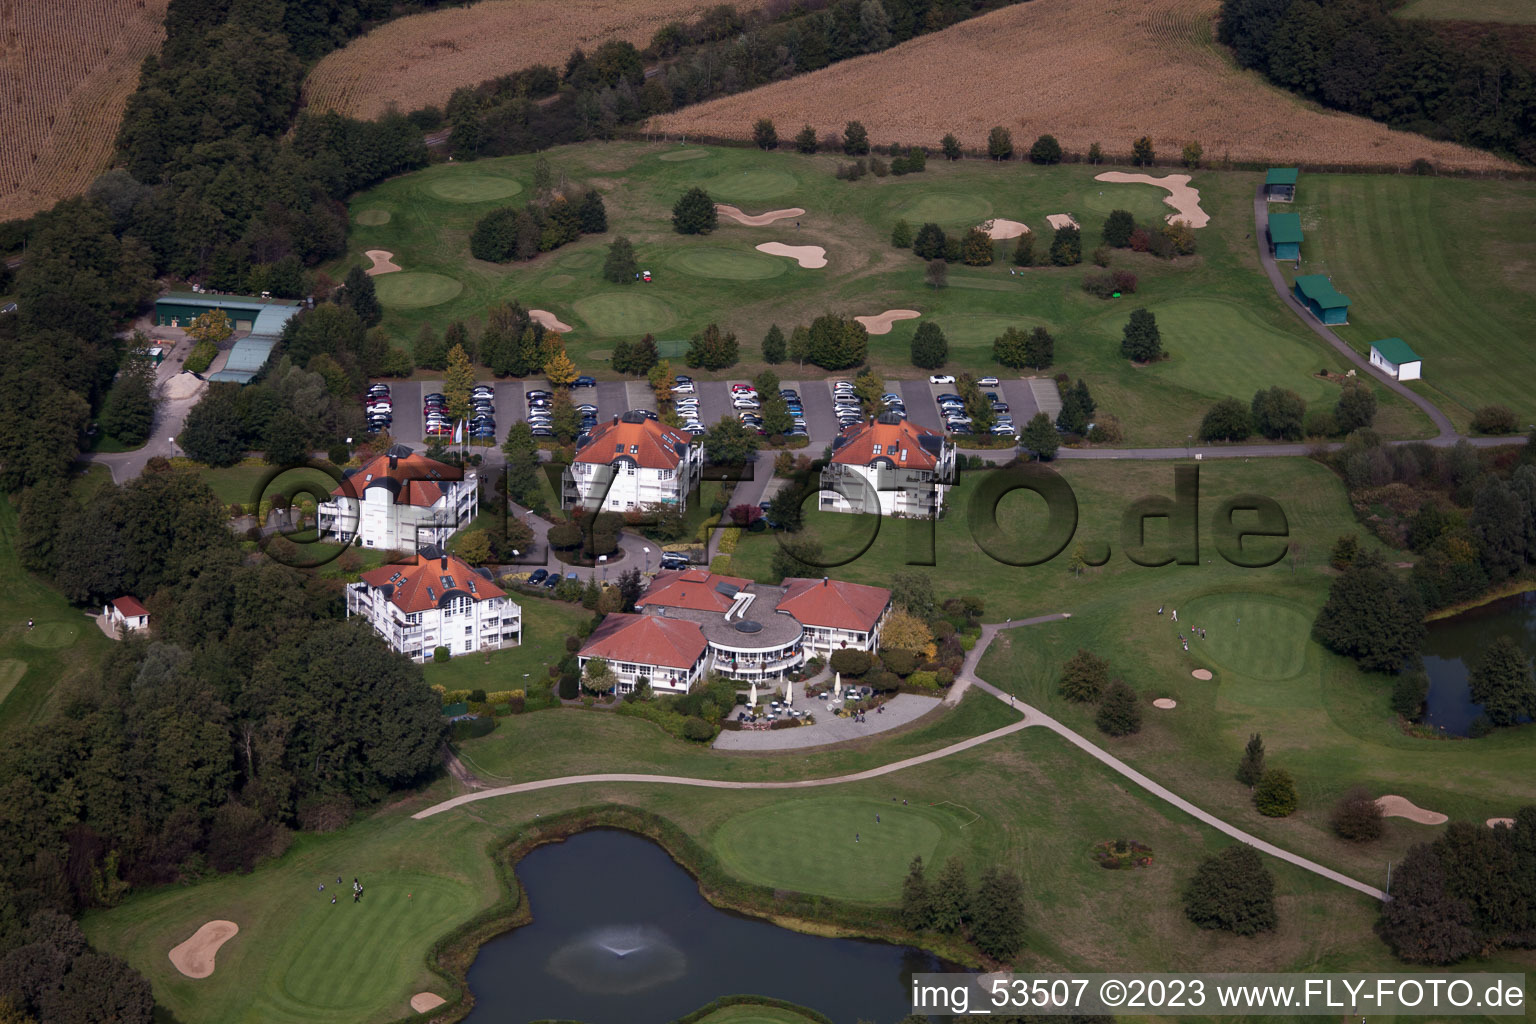 Baden-Baden Golf Club Soufflenheim in Soufflenheim in the state Bas-Rhin, France out of the air